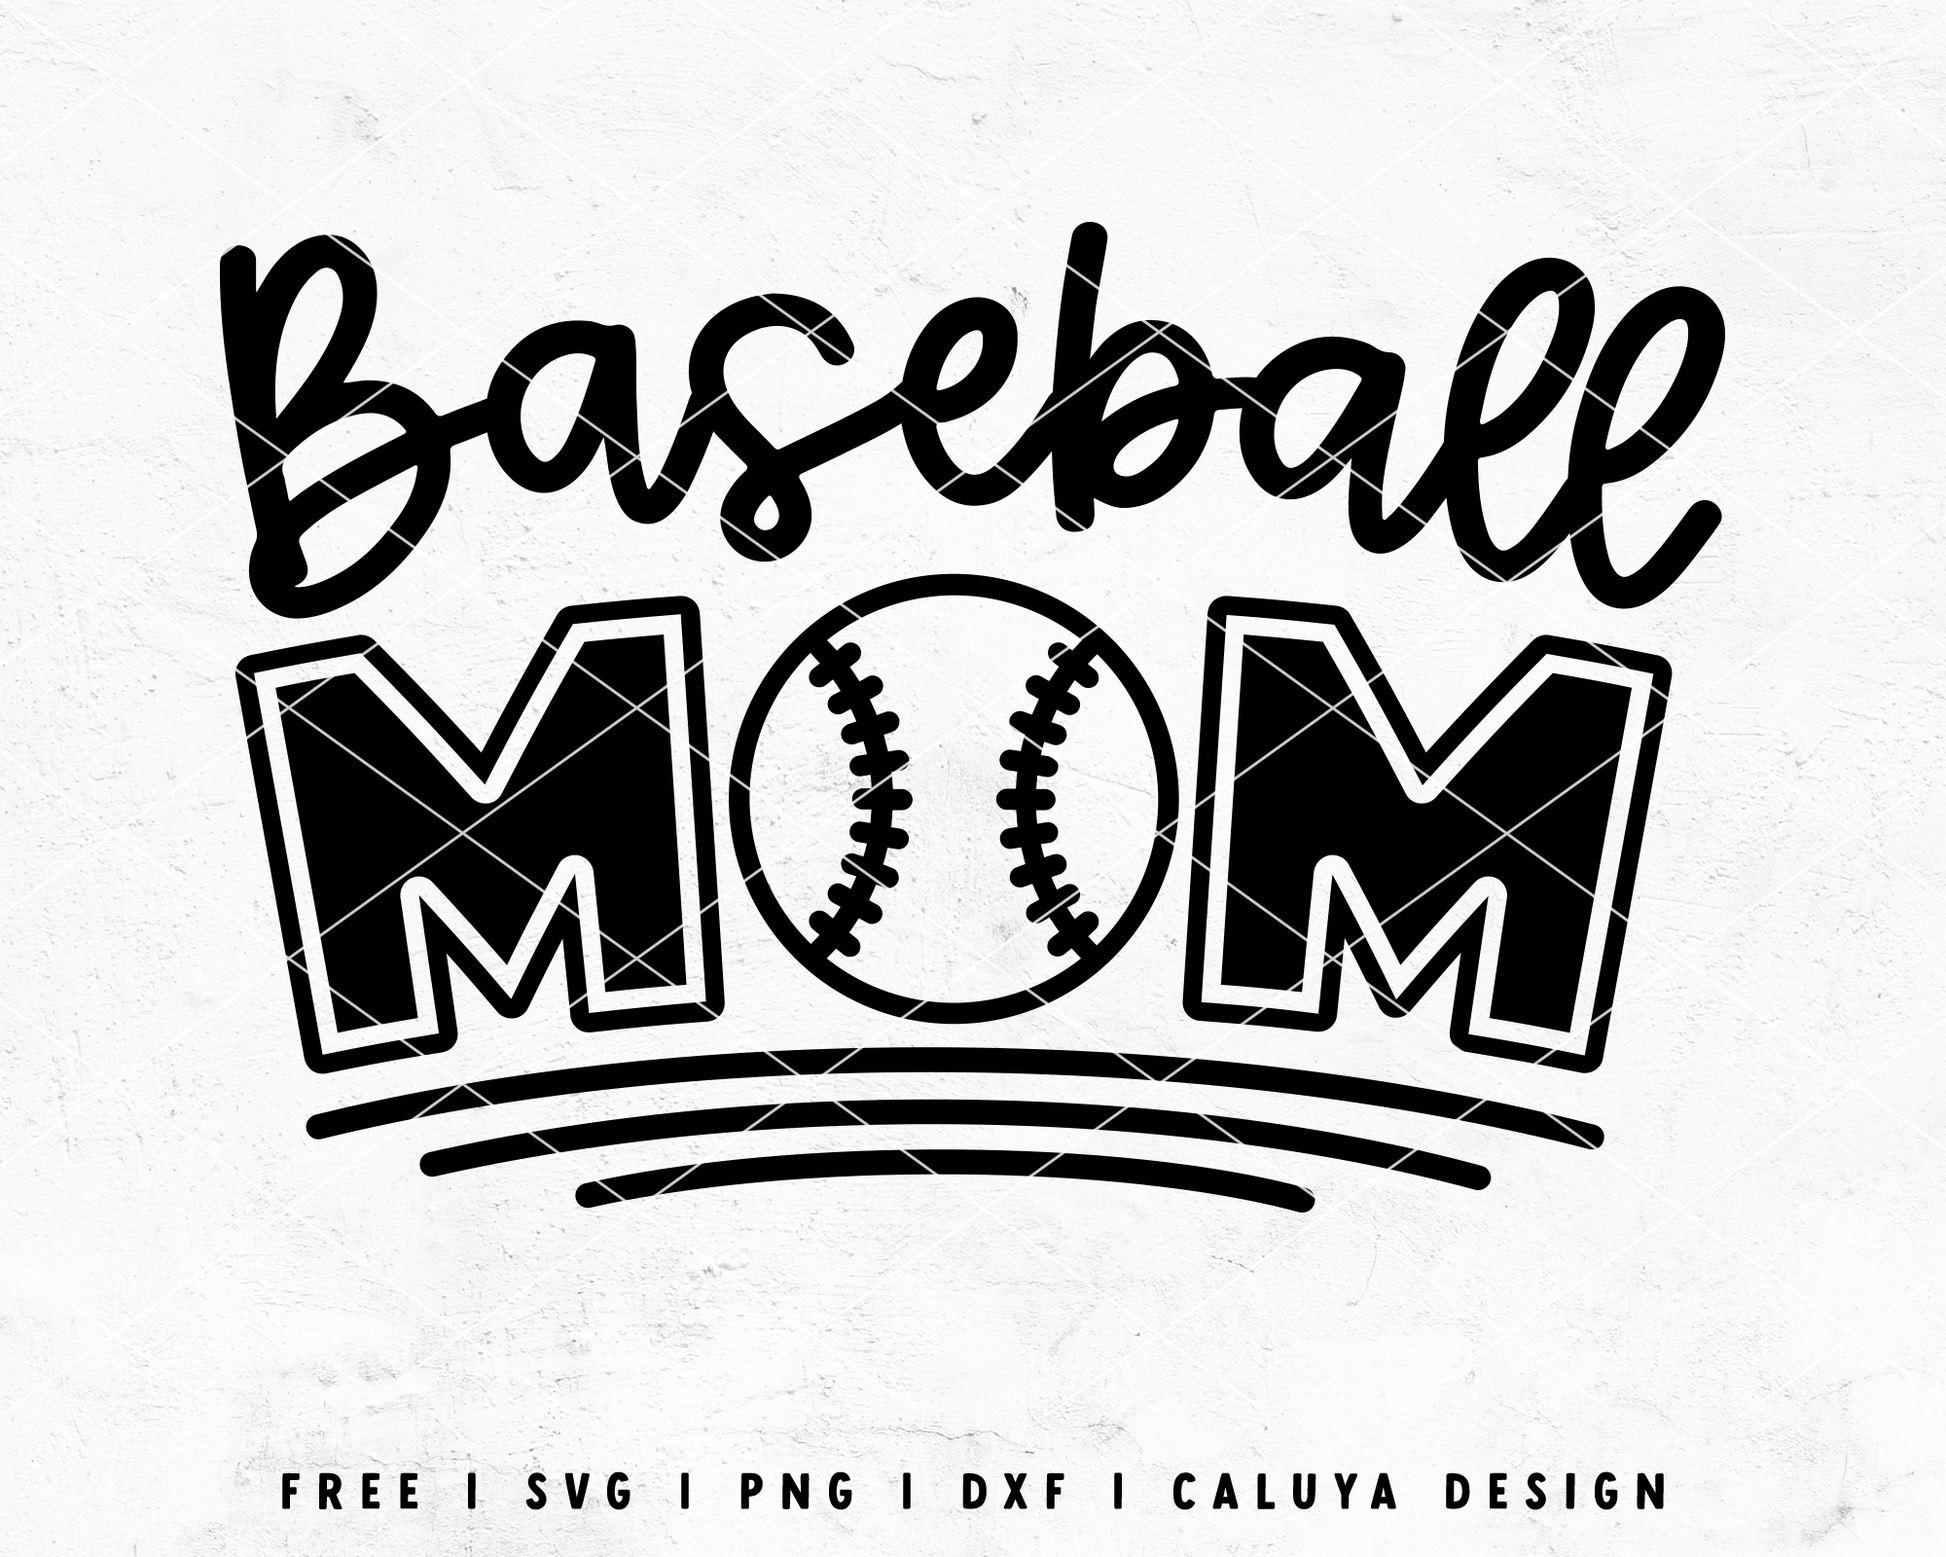 FREE Mom SVG | Baseball Mom SVG | Sport Mom SVG Cut File for Cricut, Cameo Silhouette | Free SVG Cut File